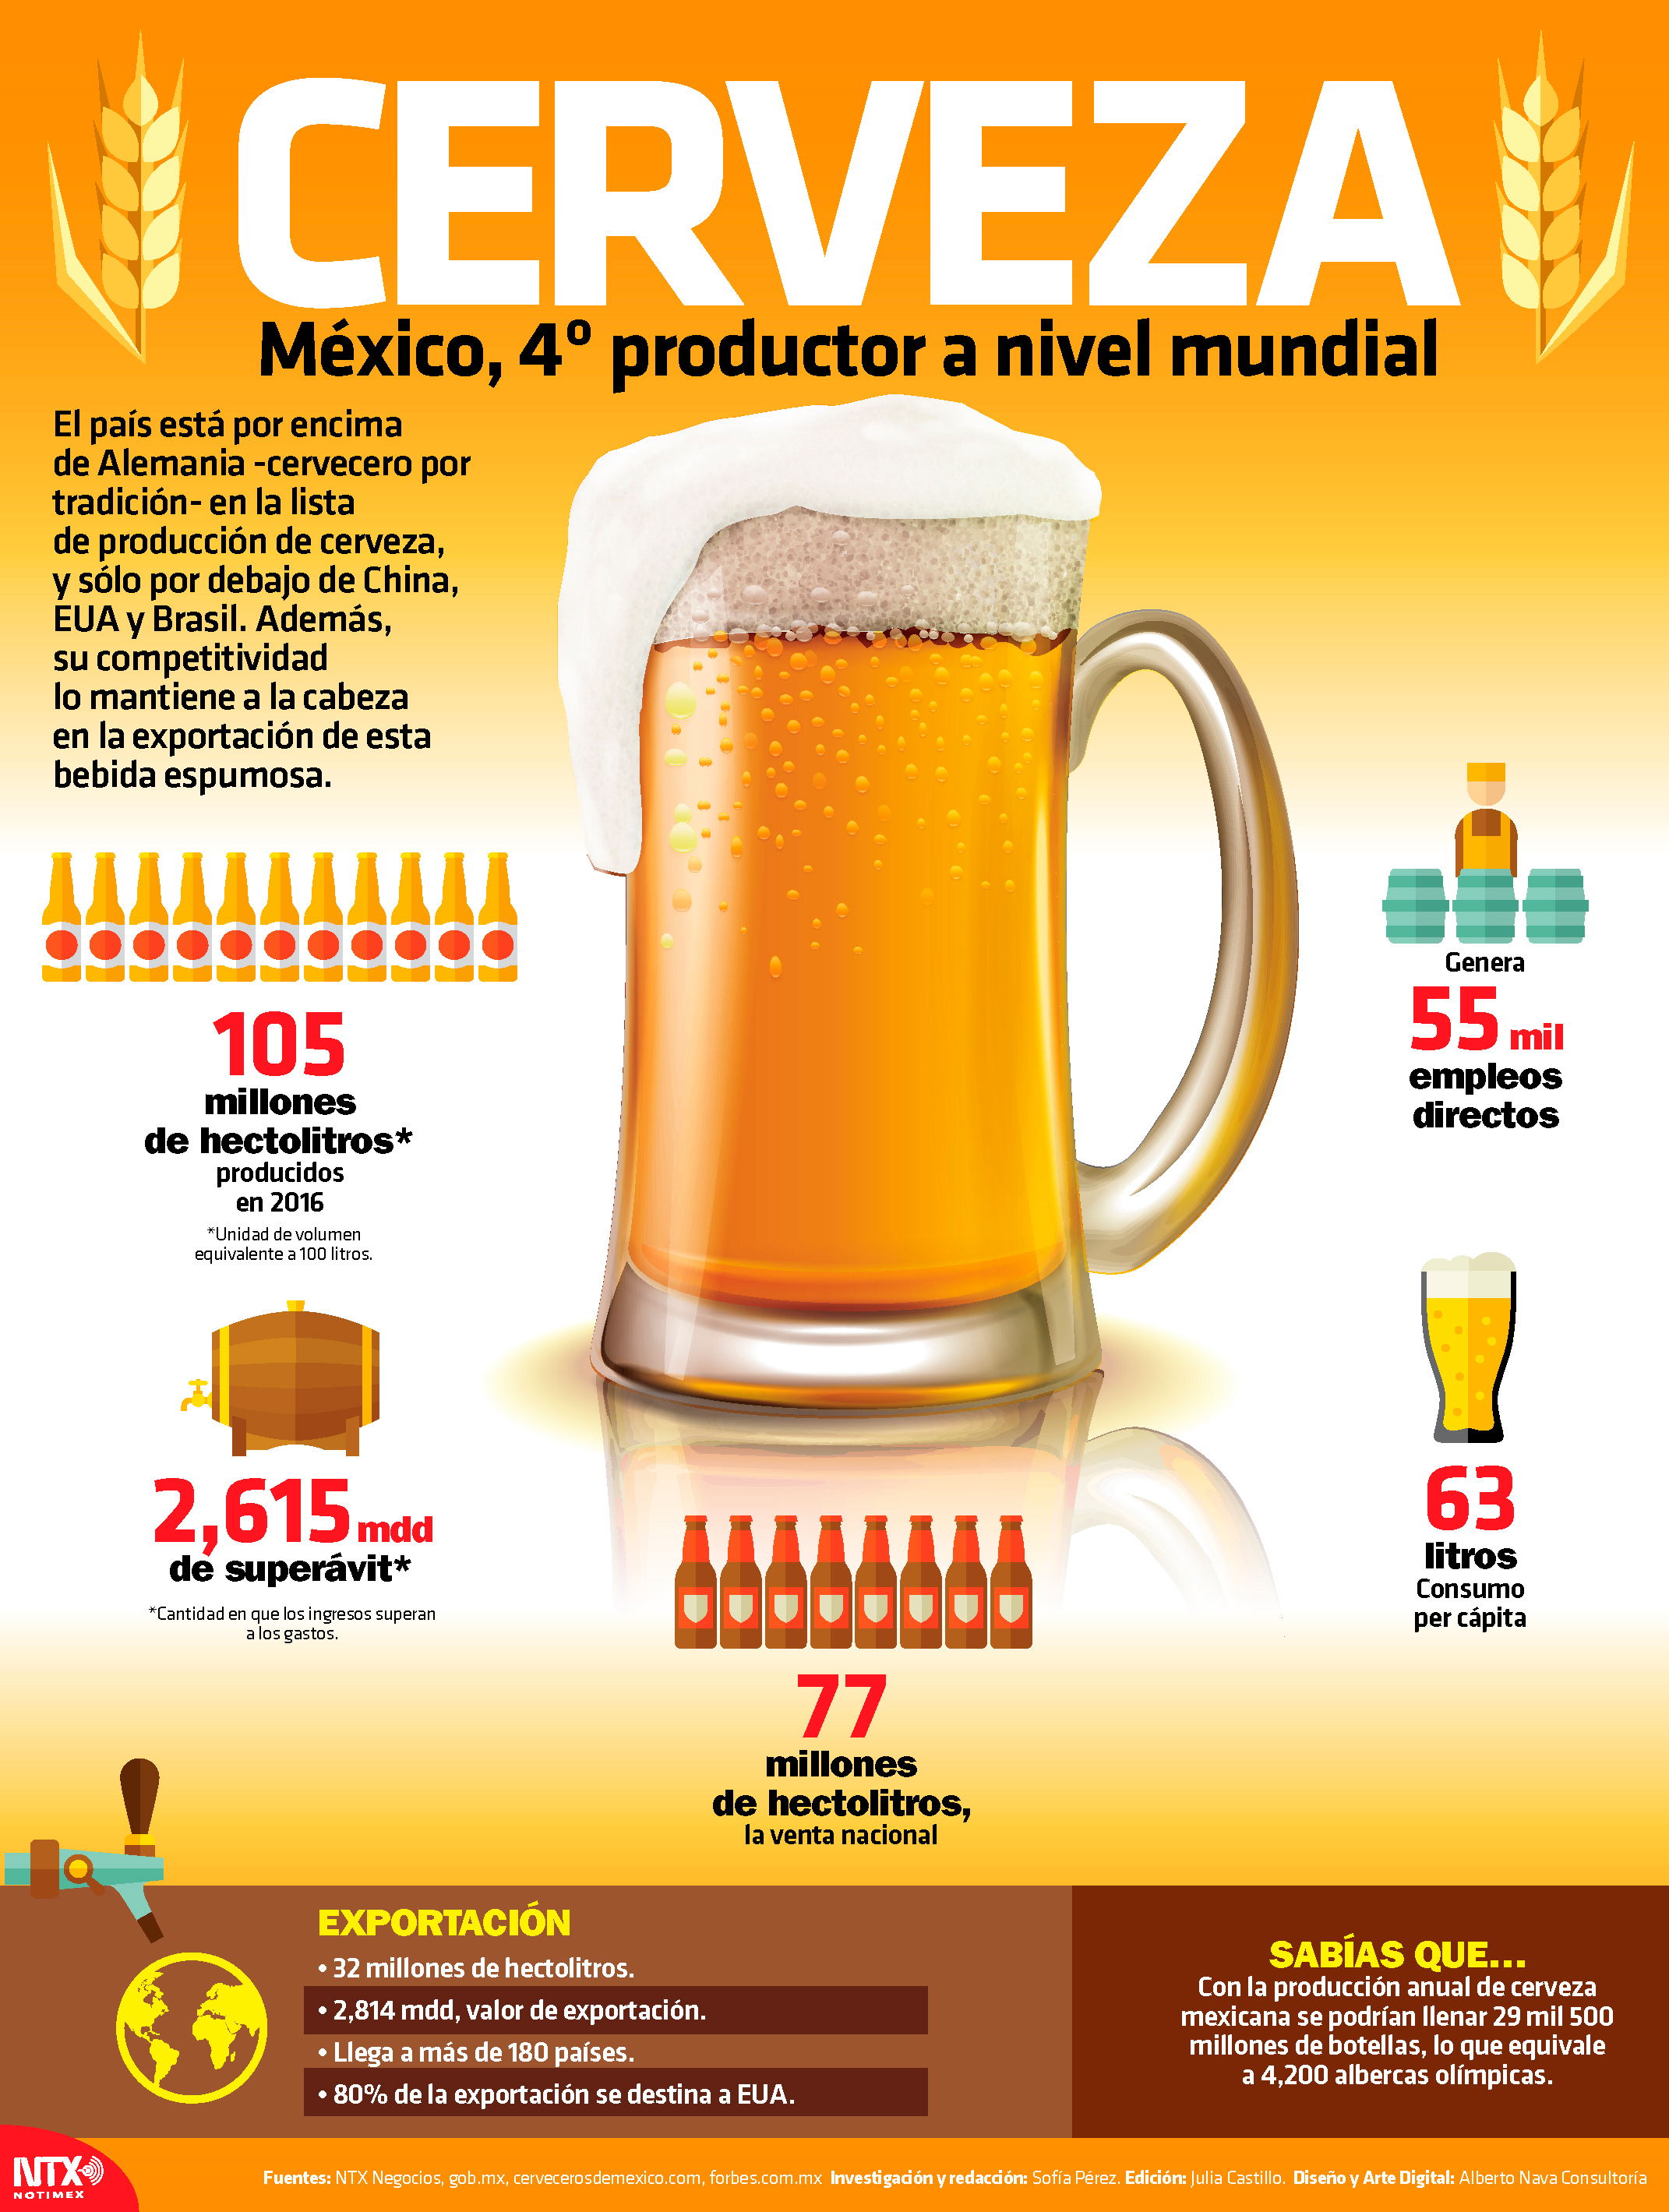 Cerveza, Mxico, 4 productor a nivel mundial